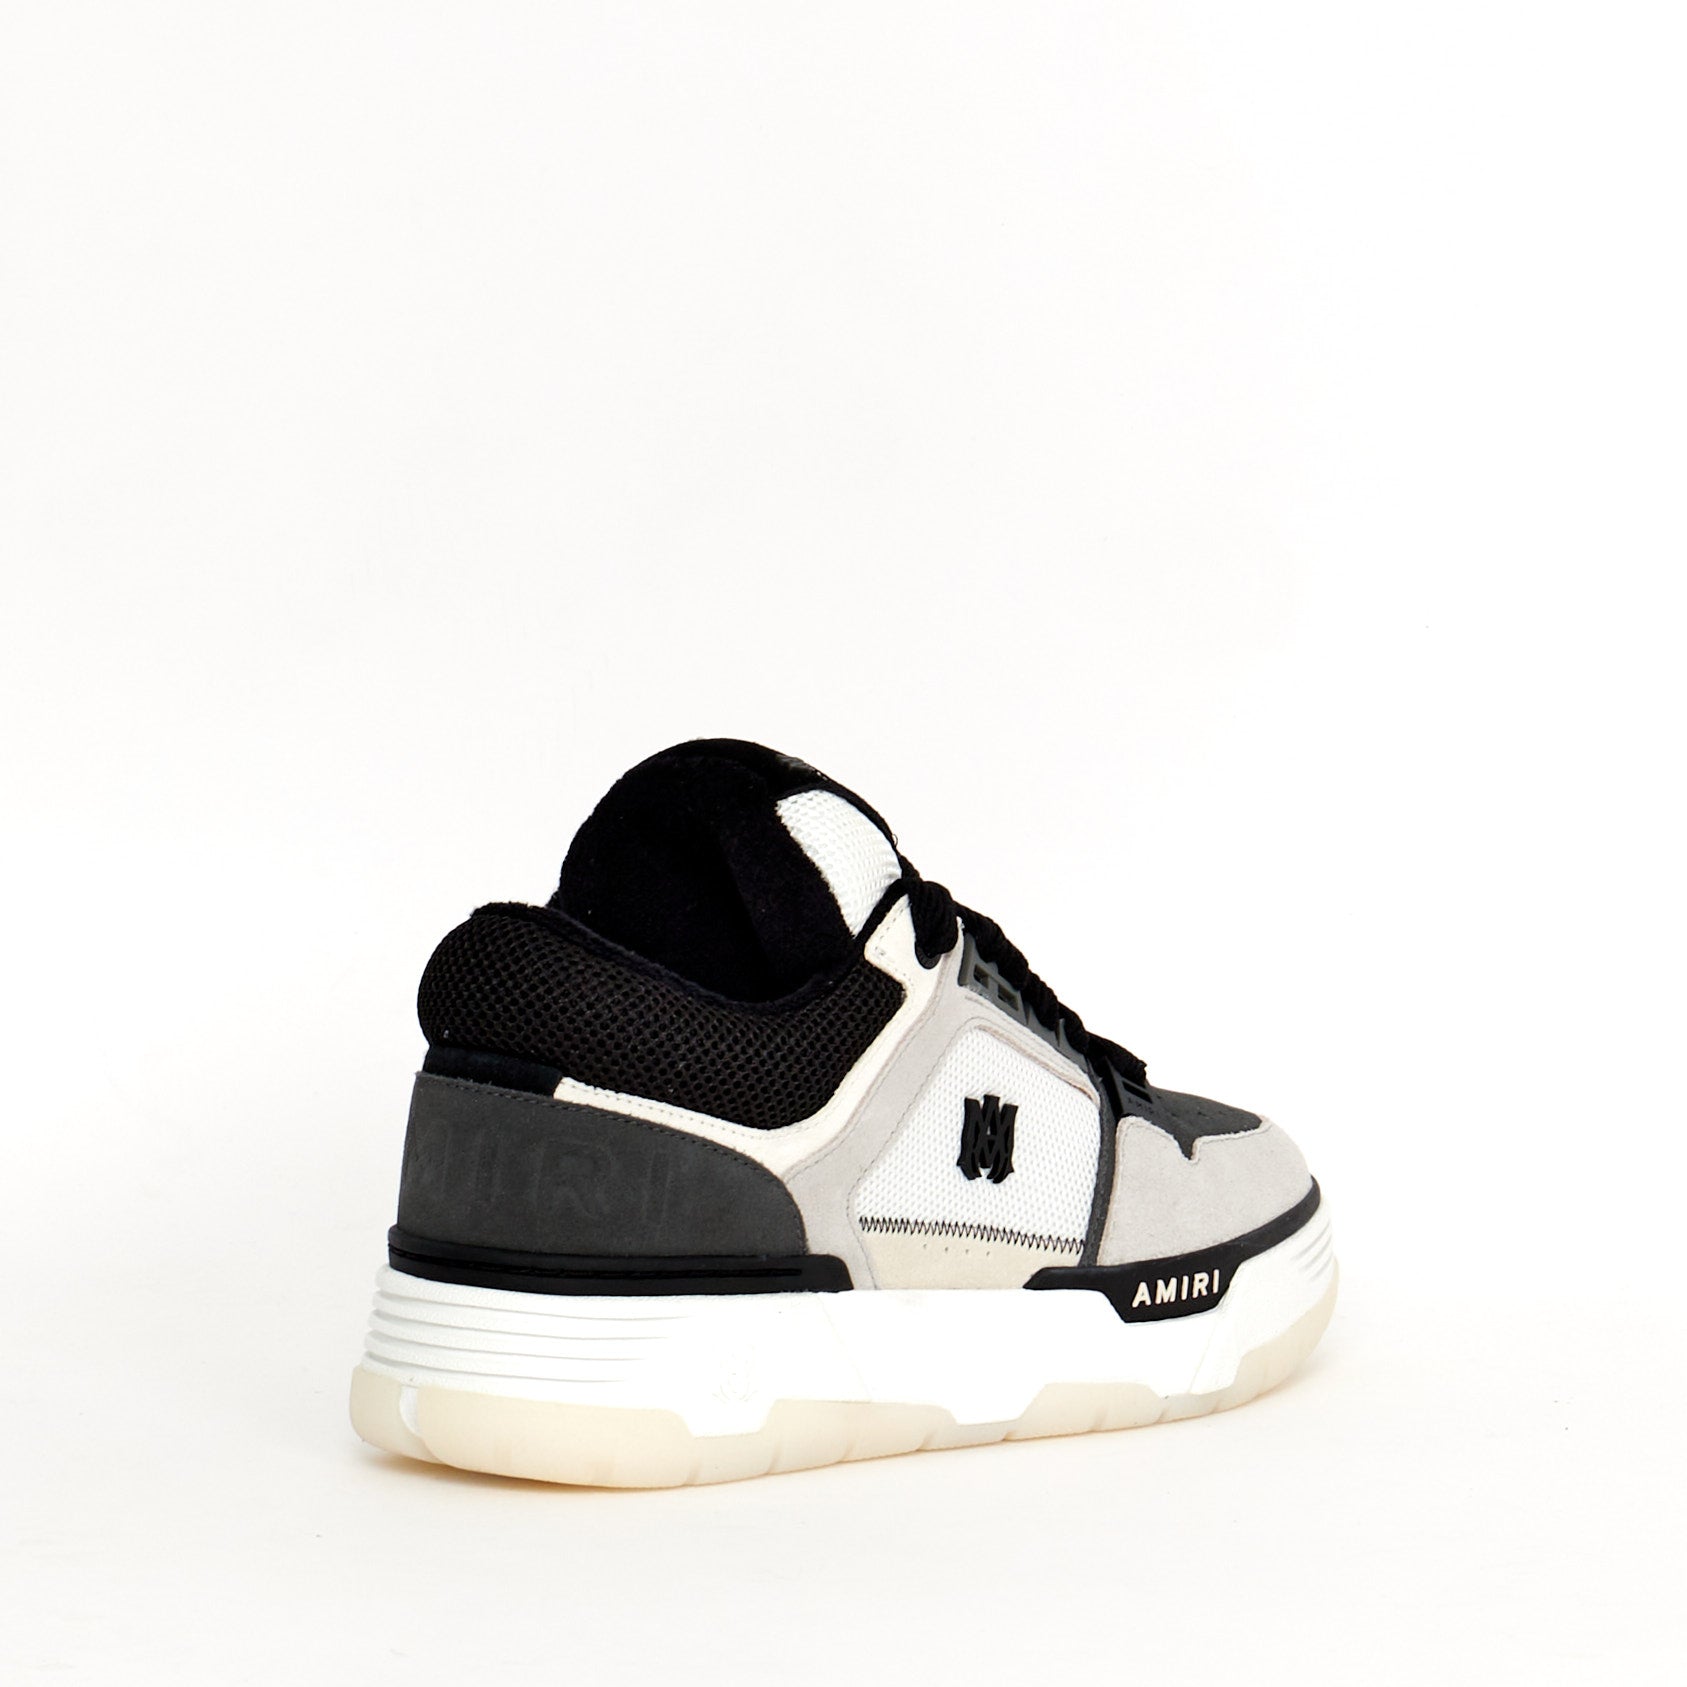 Sneakers Amiri MA-1 Noir et Blanche